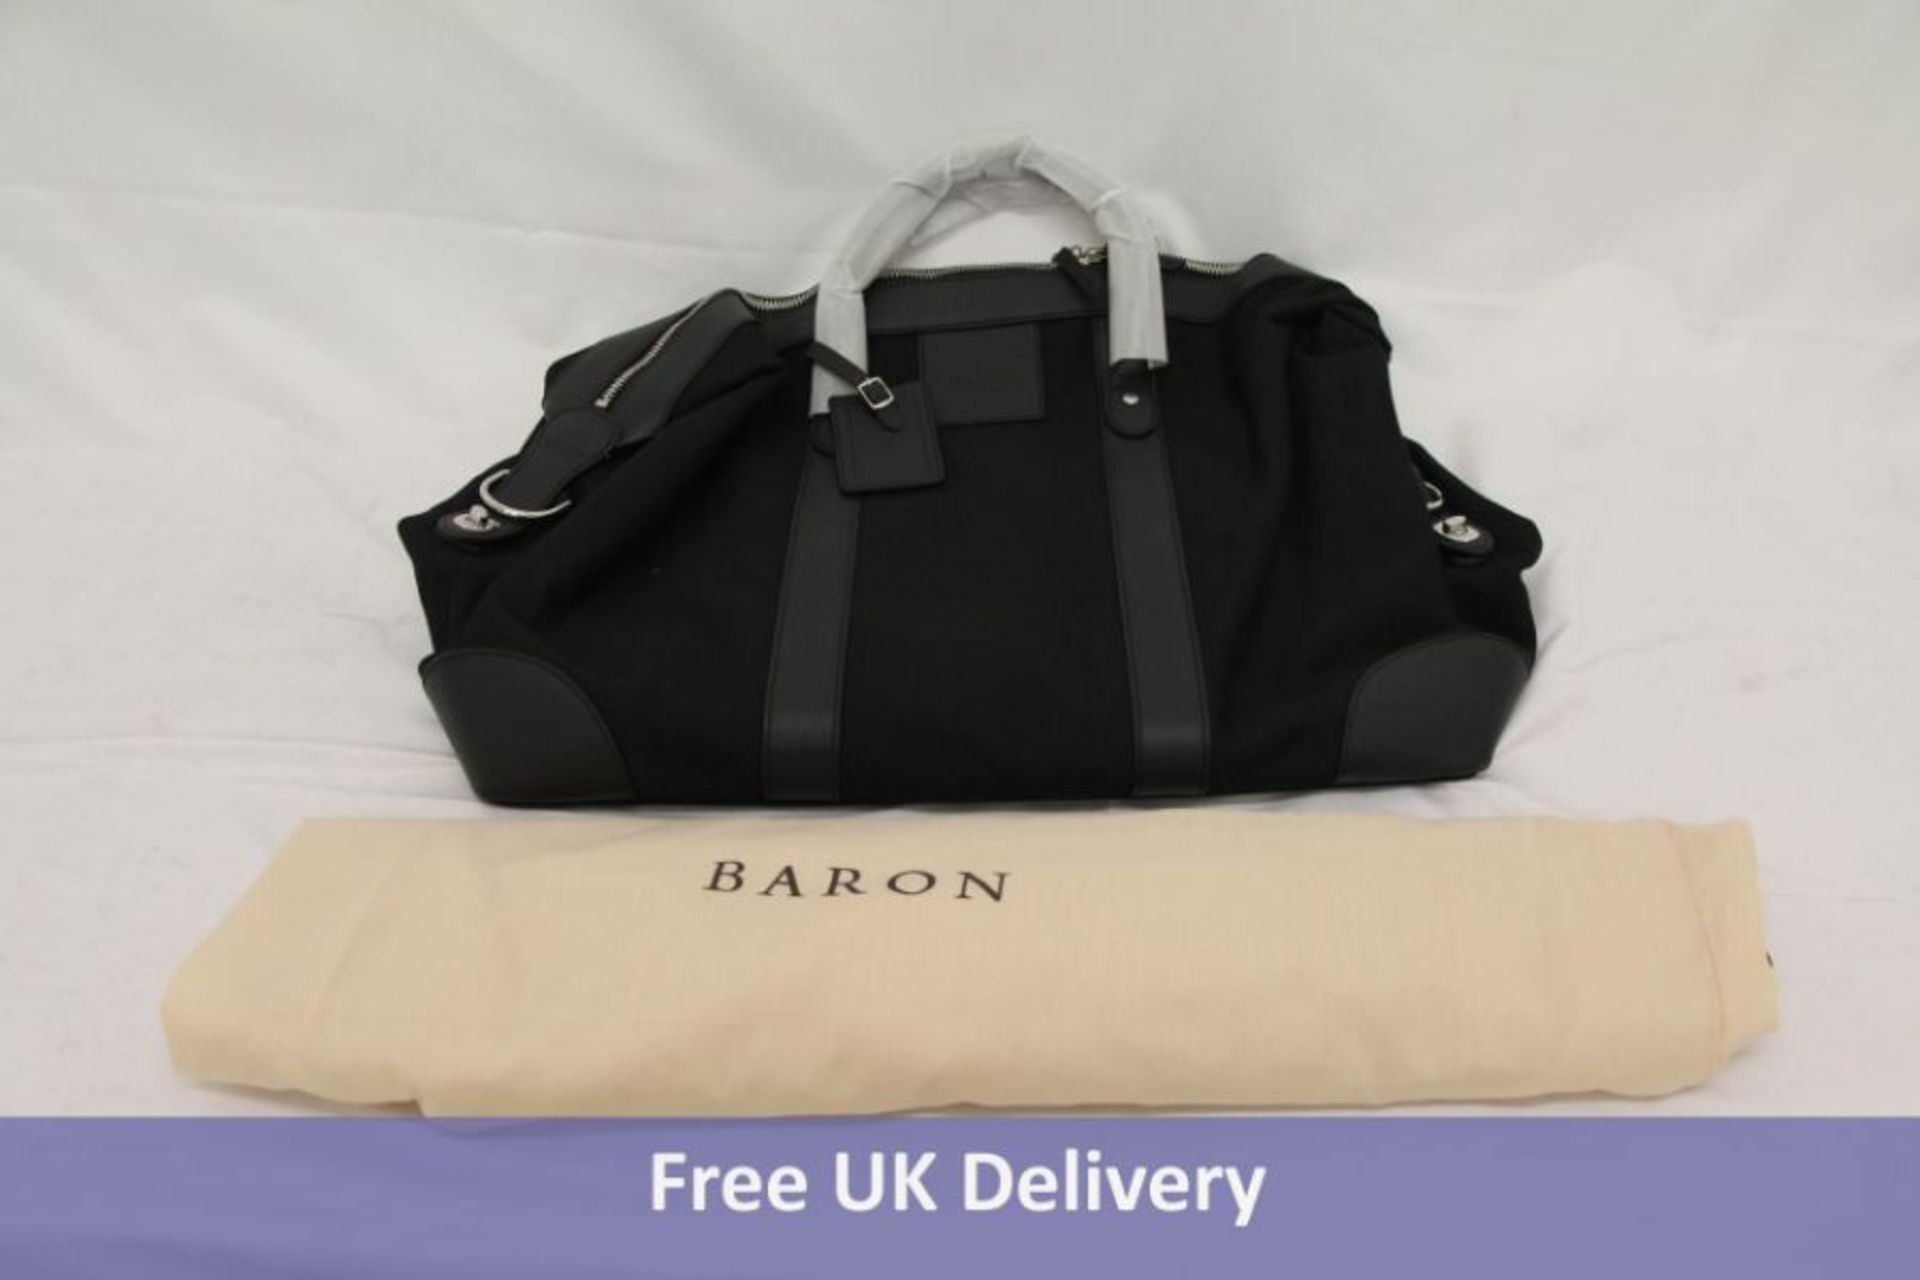 Baron Weekend Bag, Black Canvas